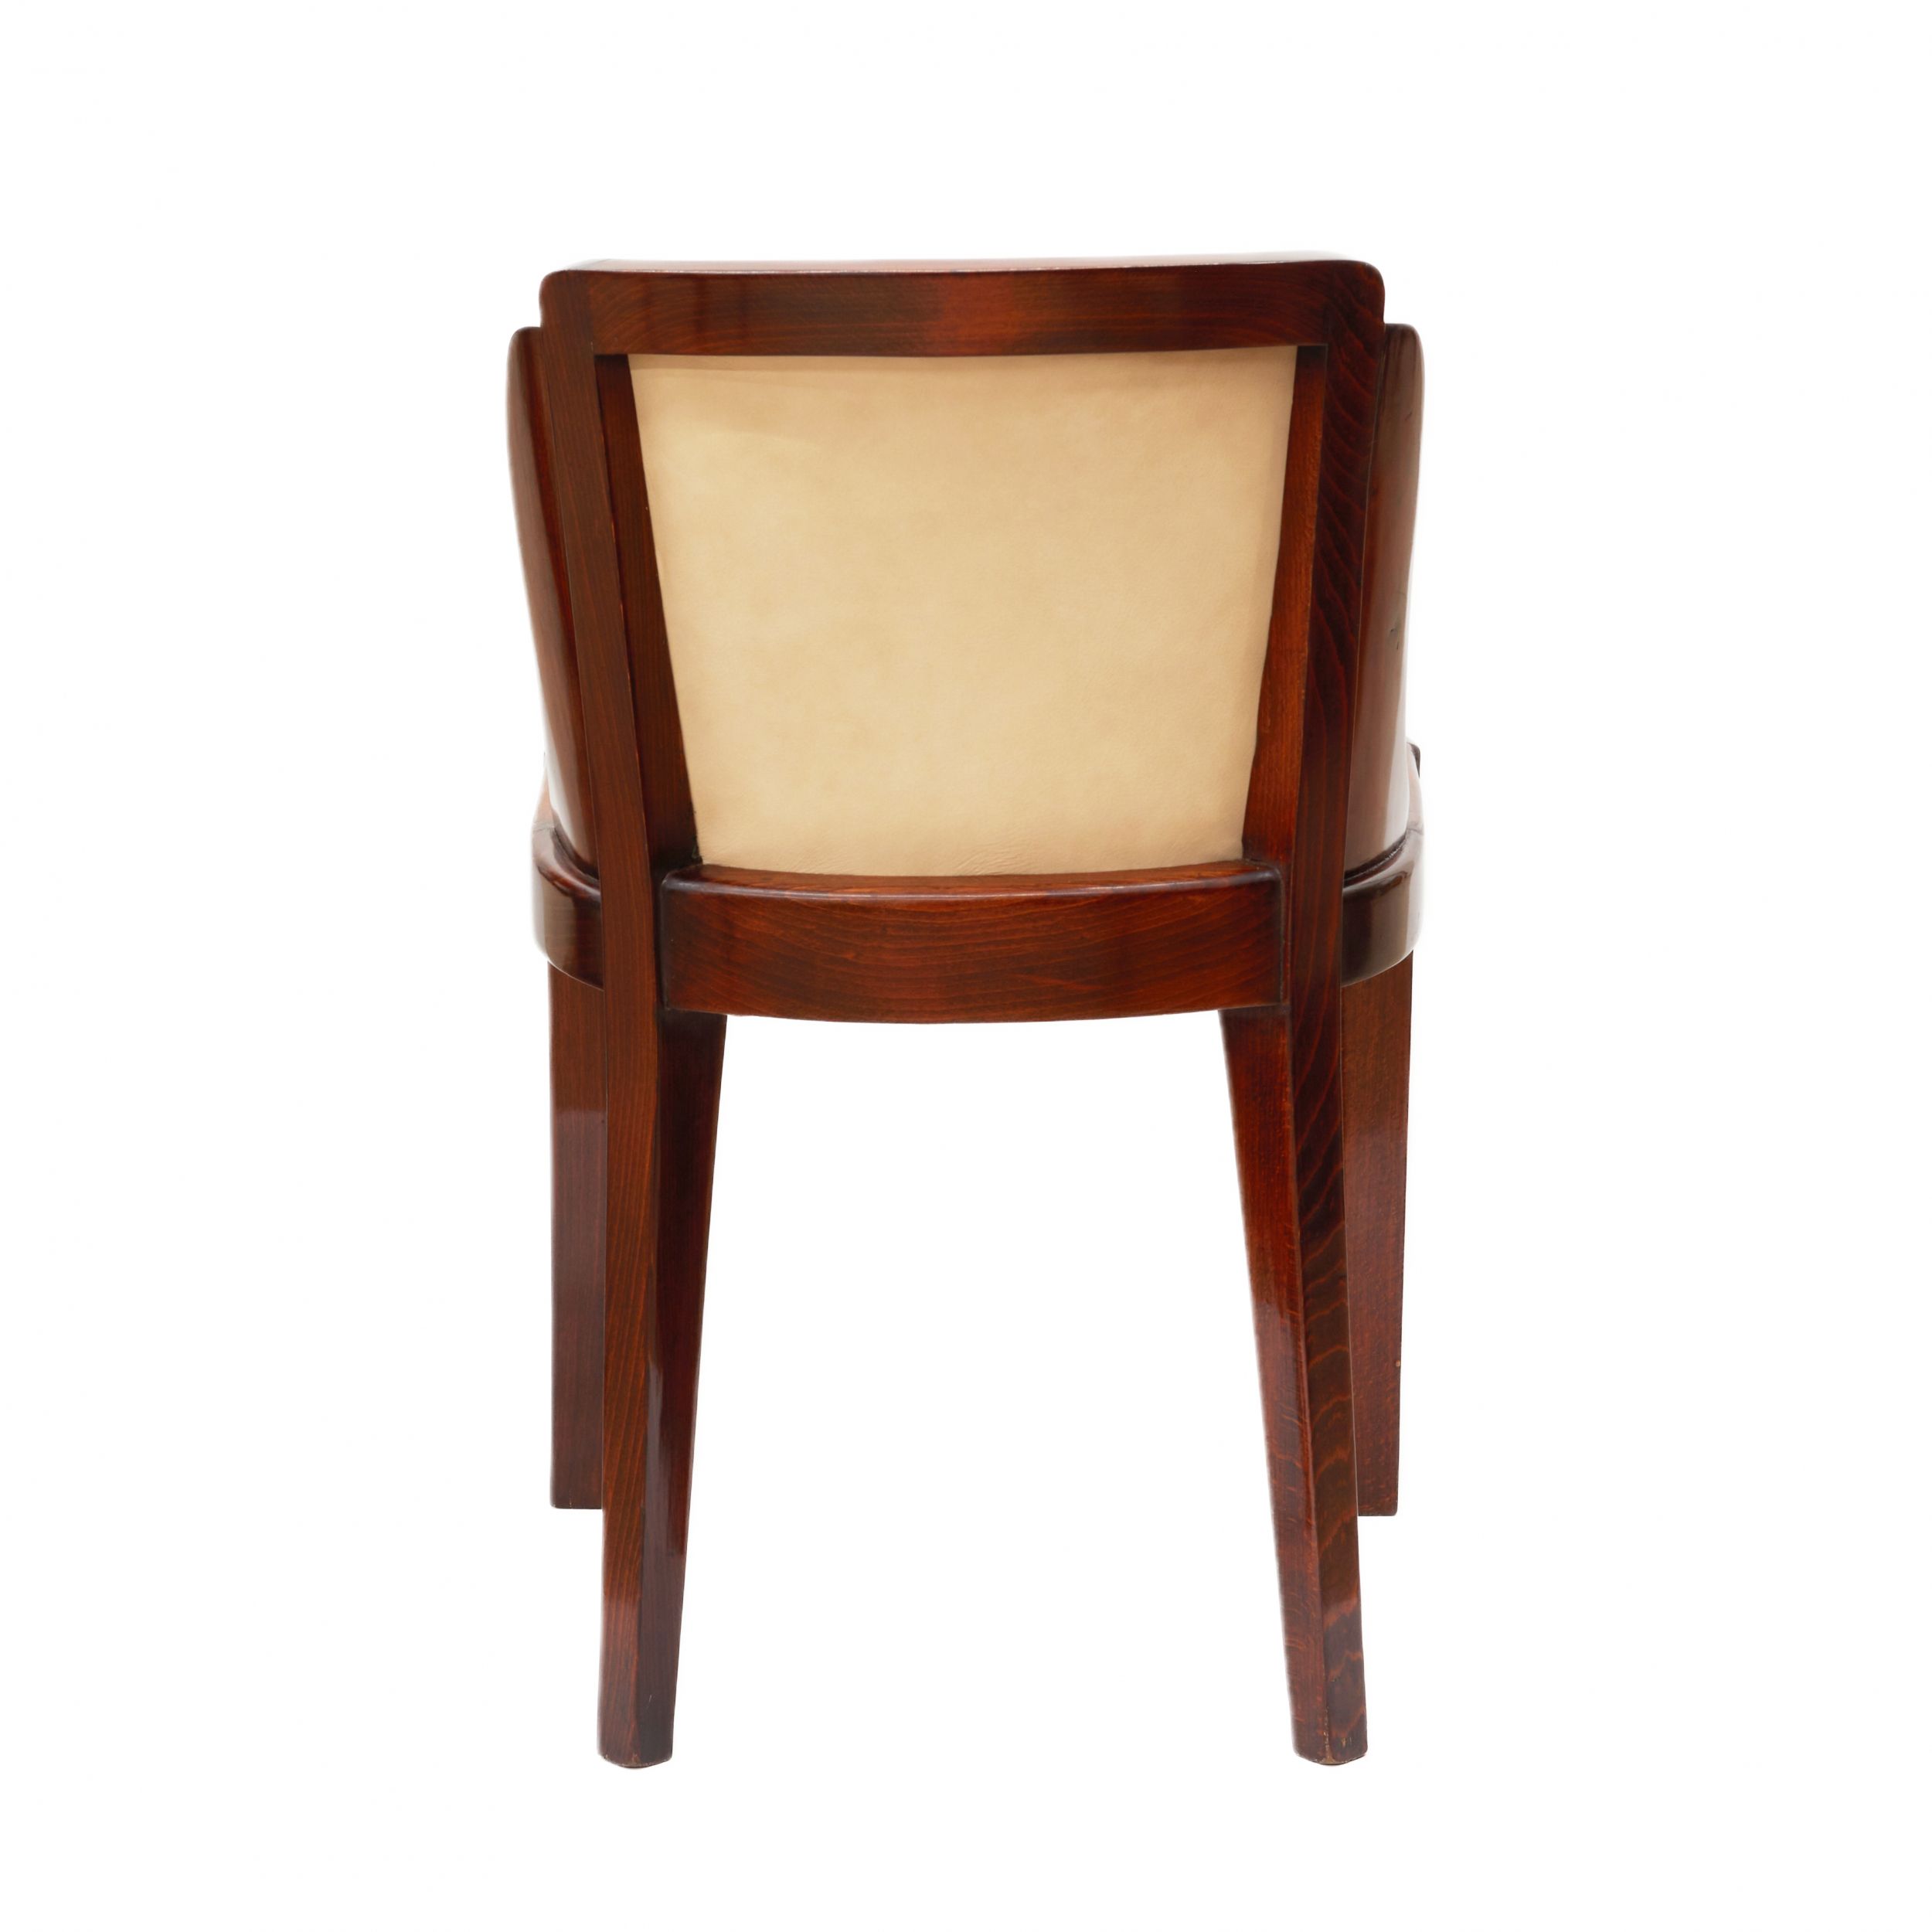 Vittorio Dassi. Grandiose furniture set in Art Deco style. - Image 10 of 11